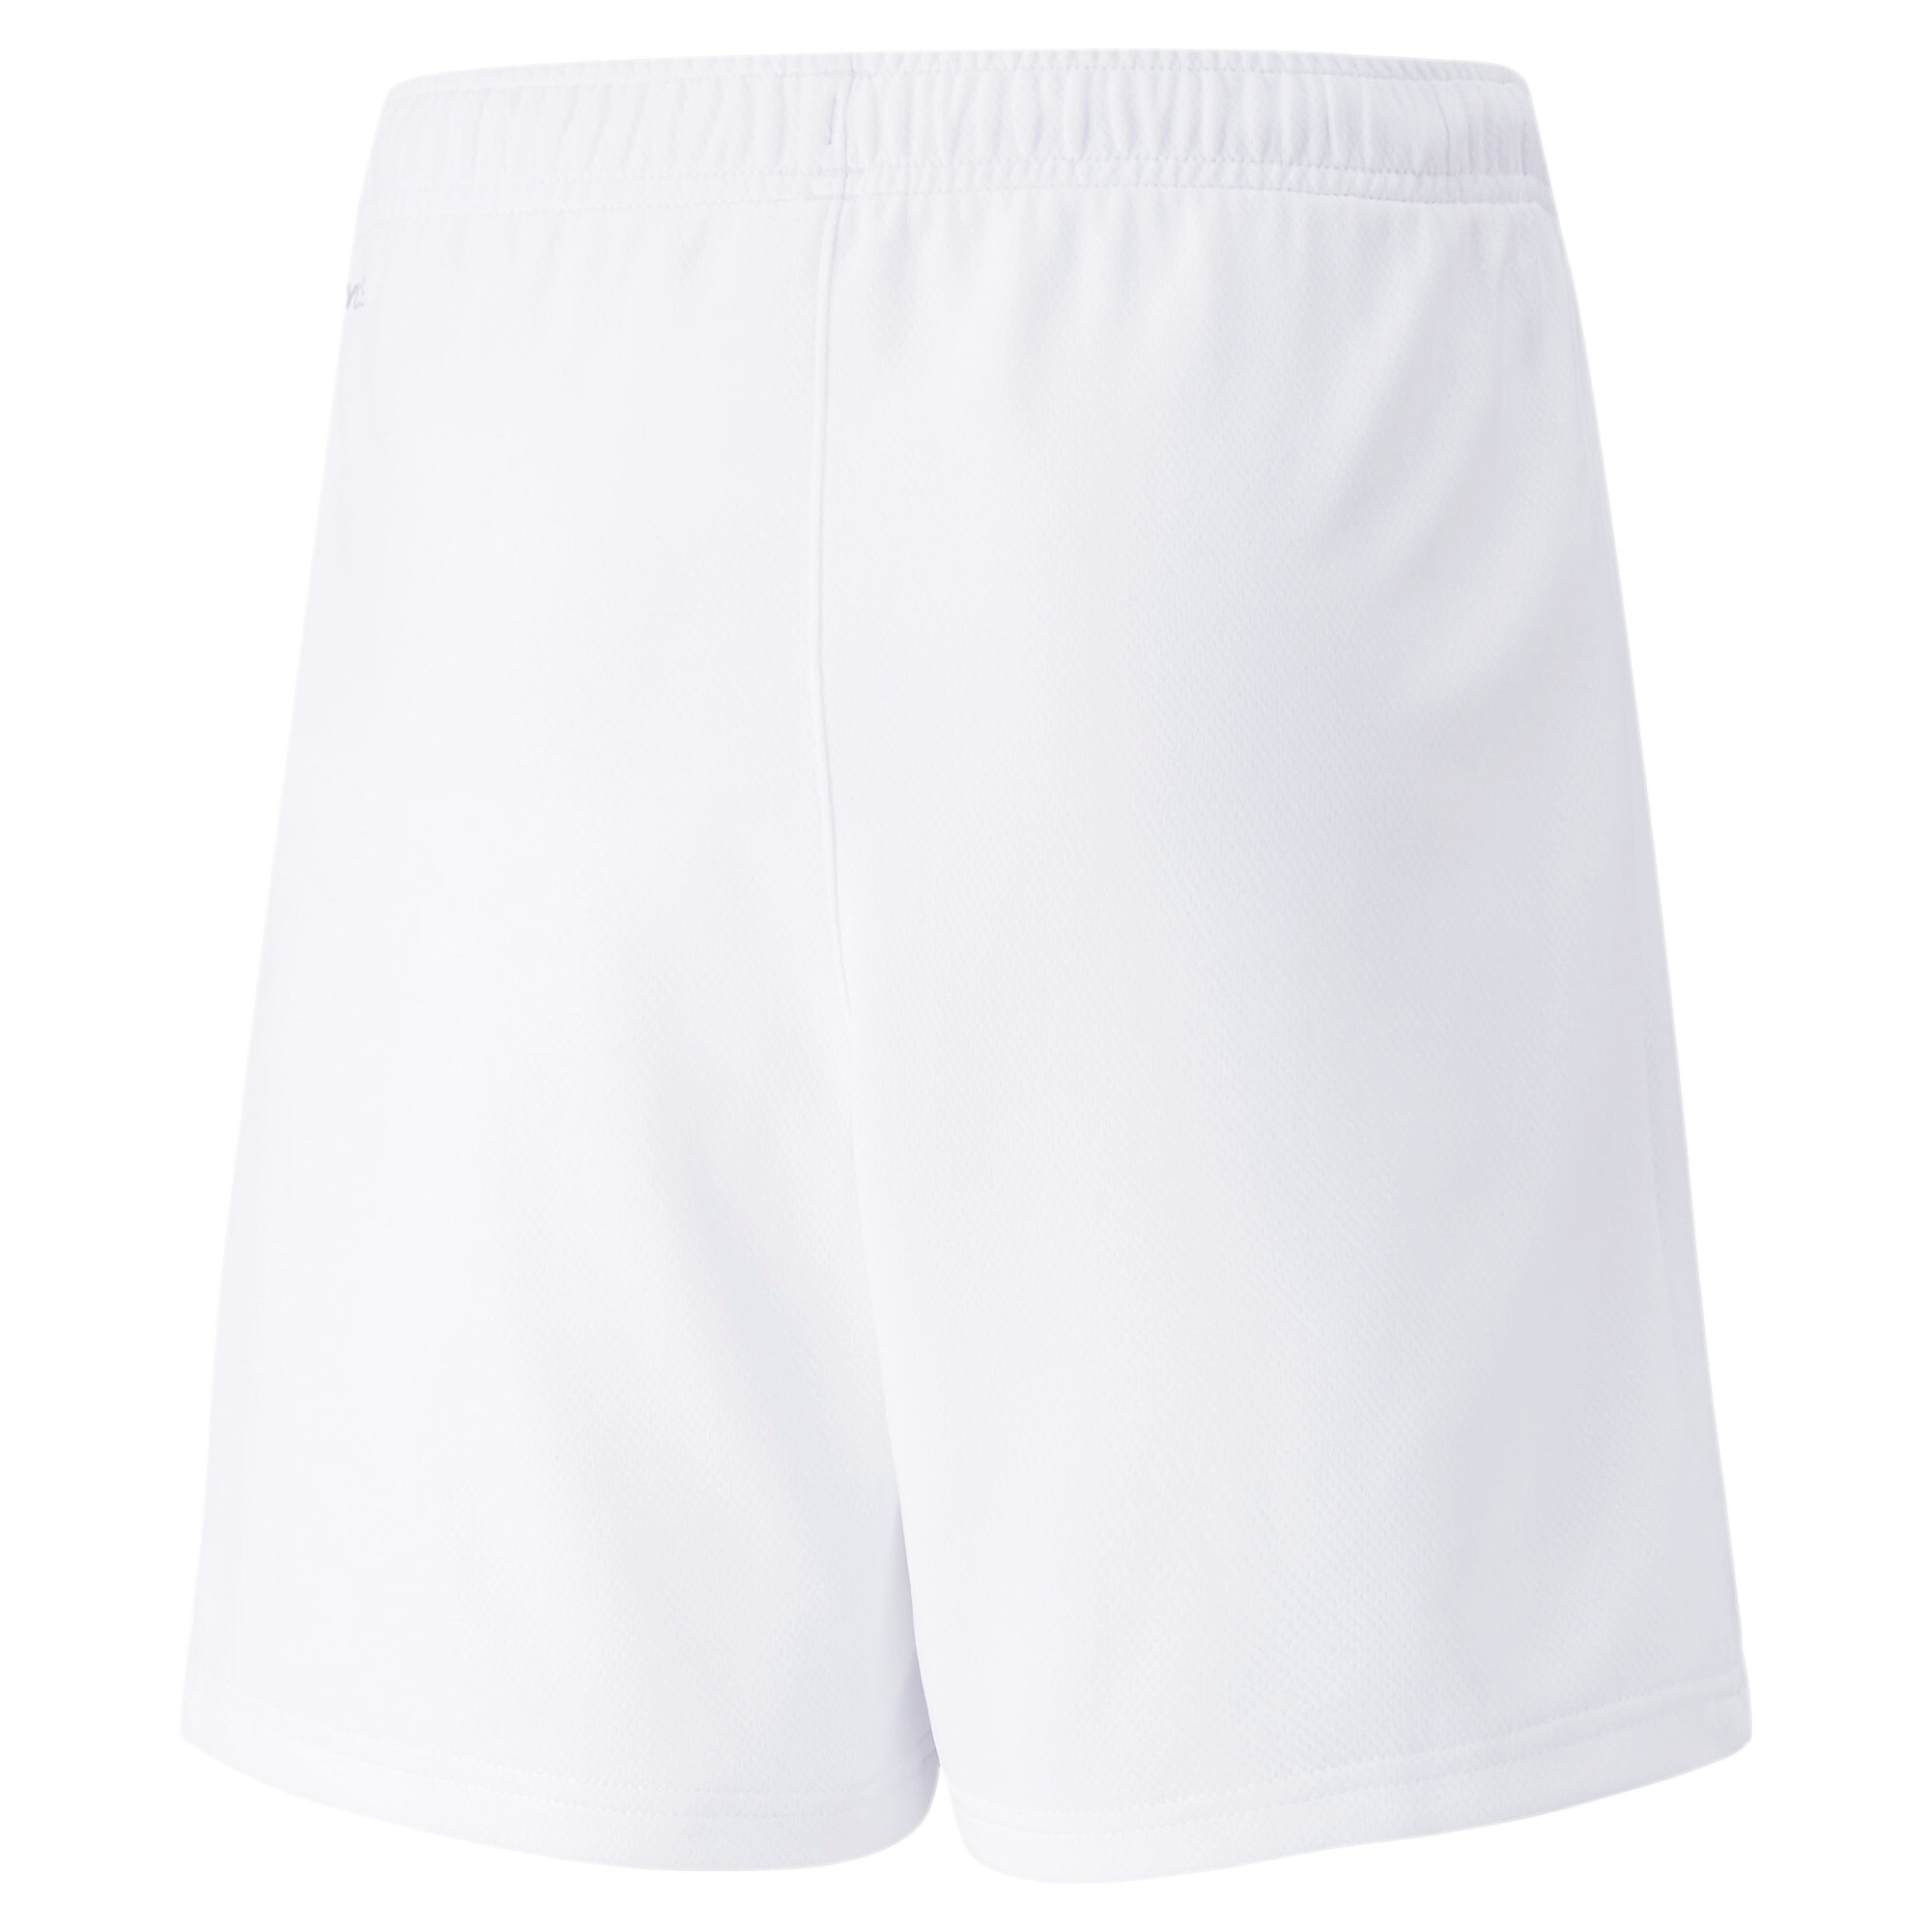 Puma Team RISE Youth Football Shorts, White, Size 15-16Y, Clothing